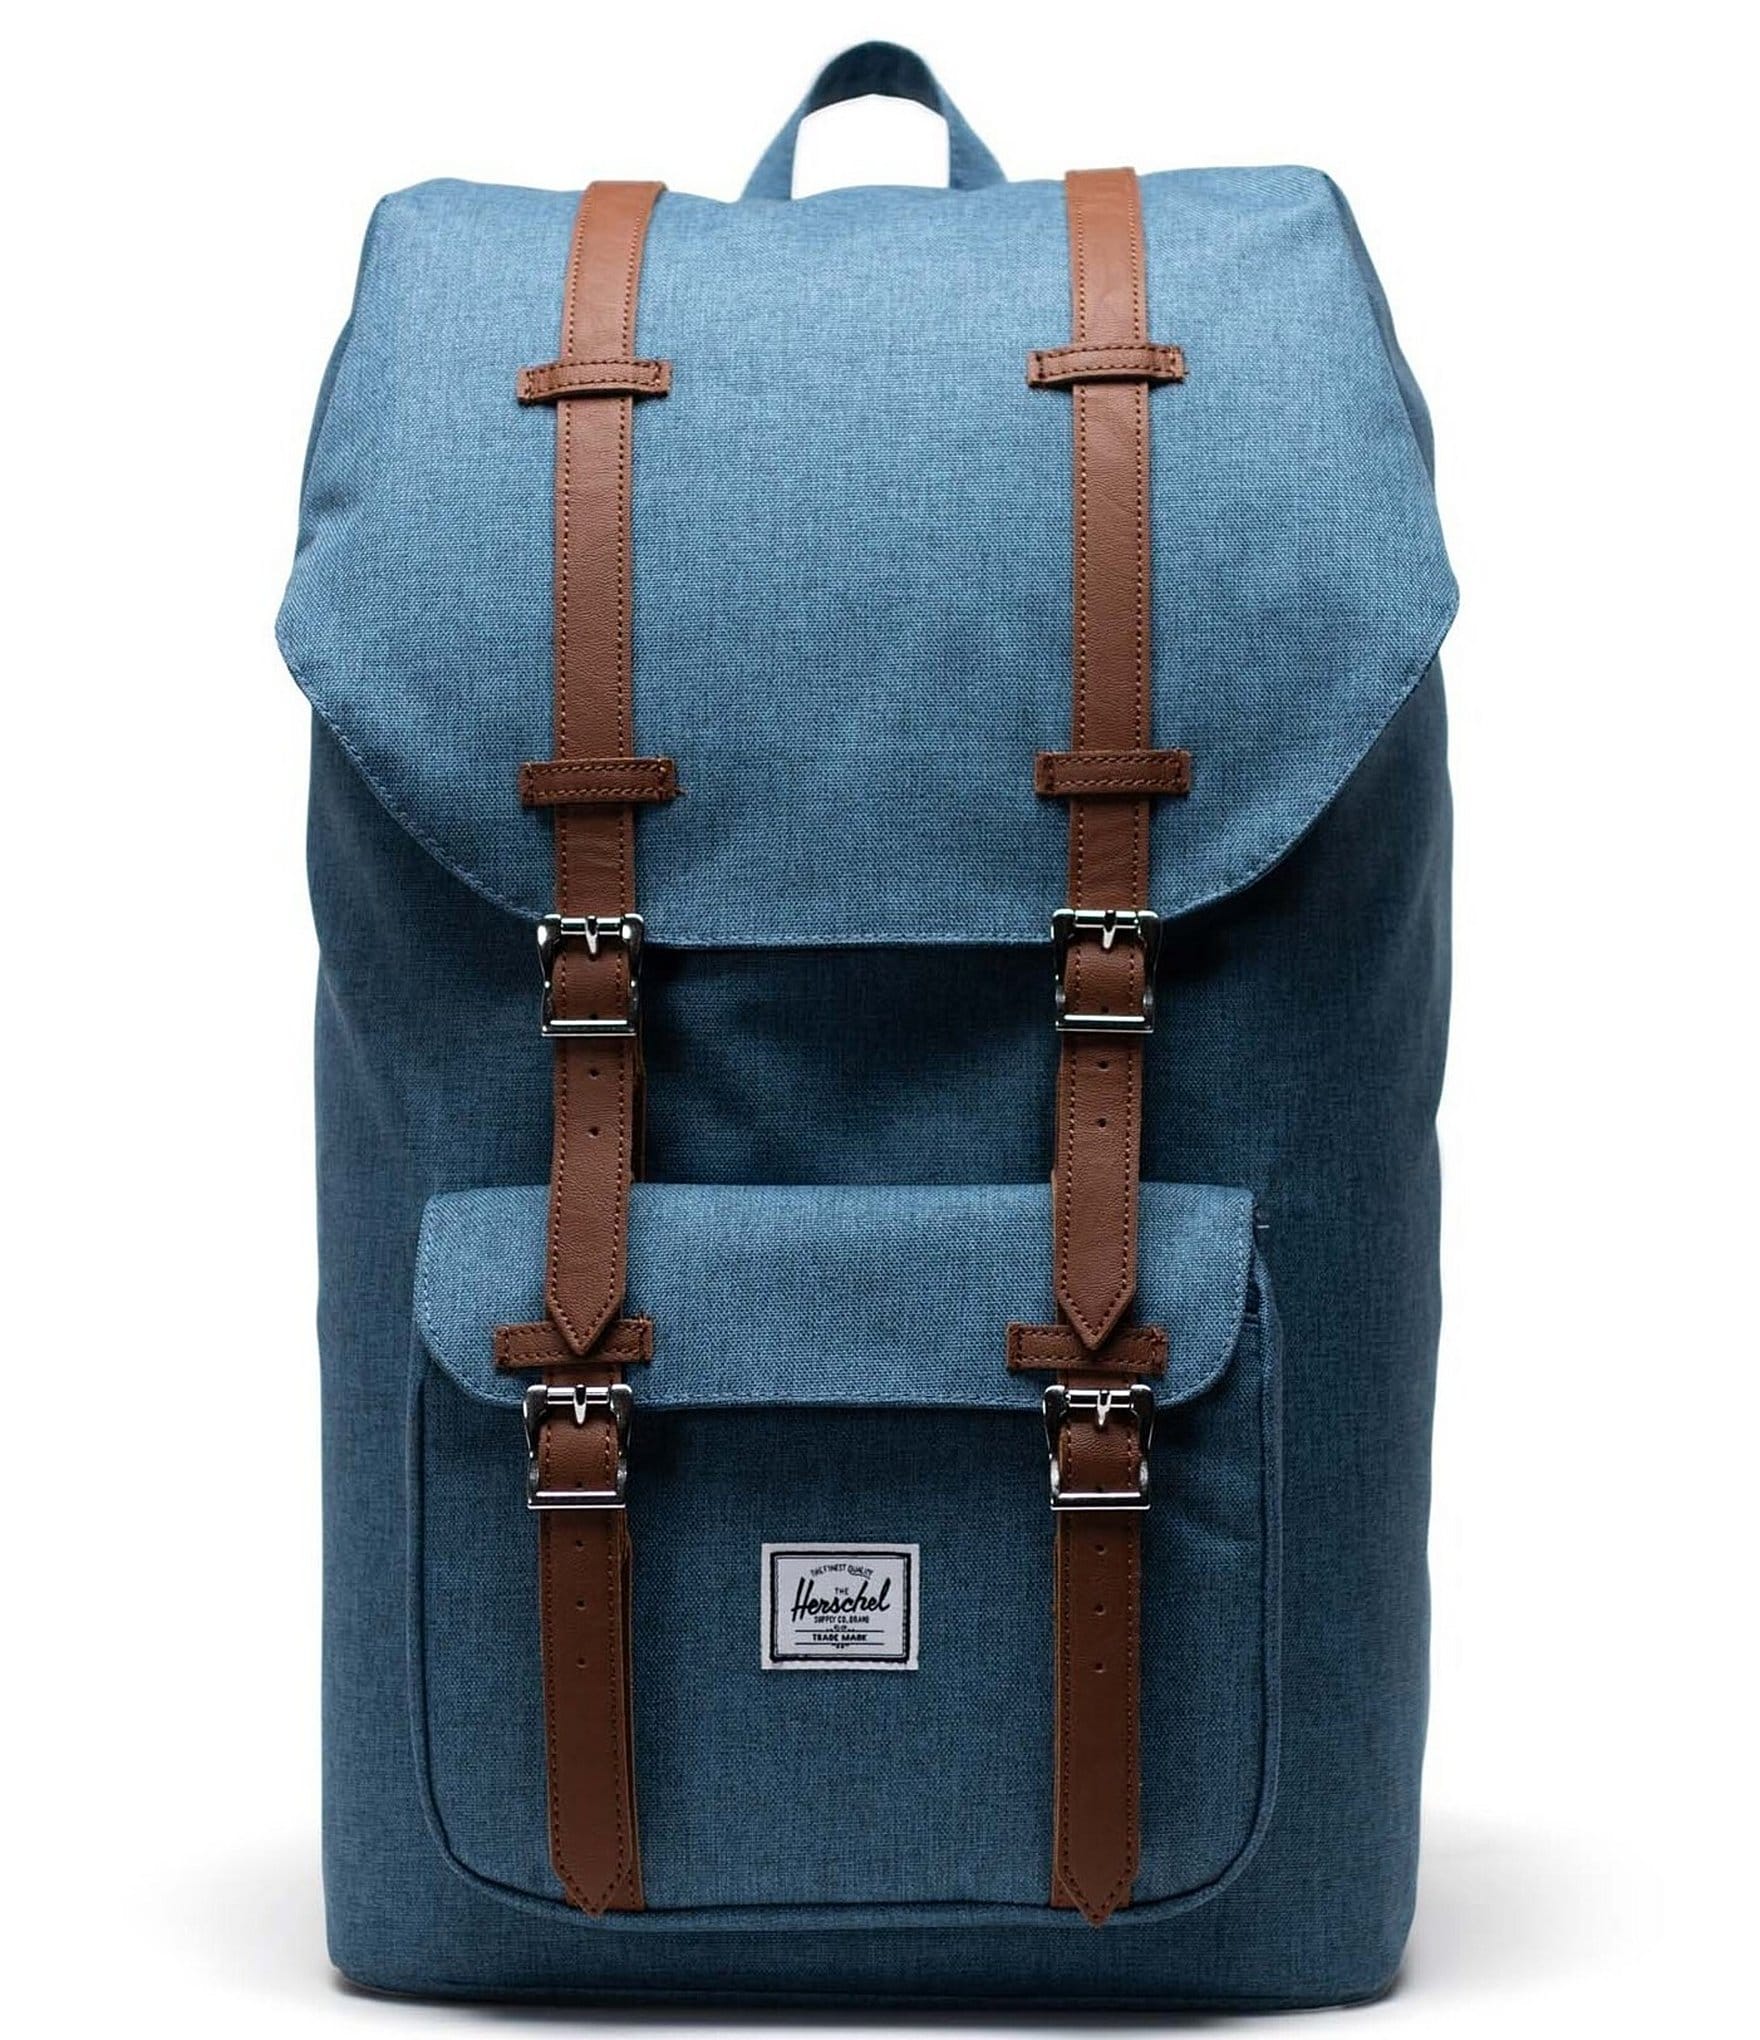 Blue Little America Backpack